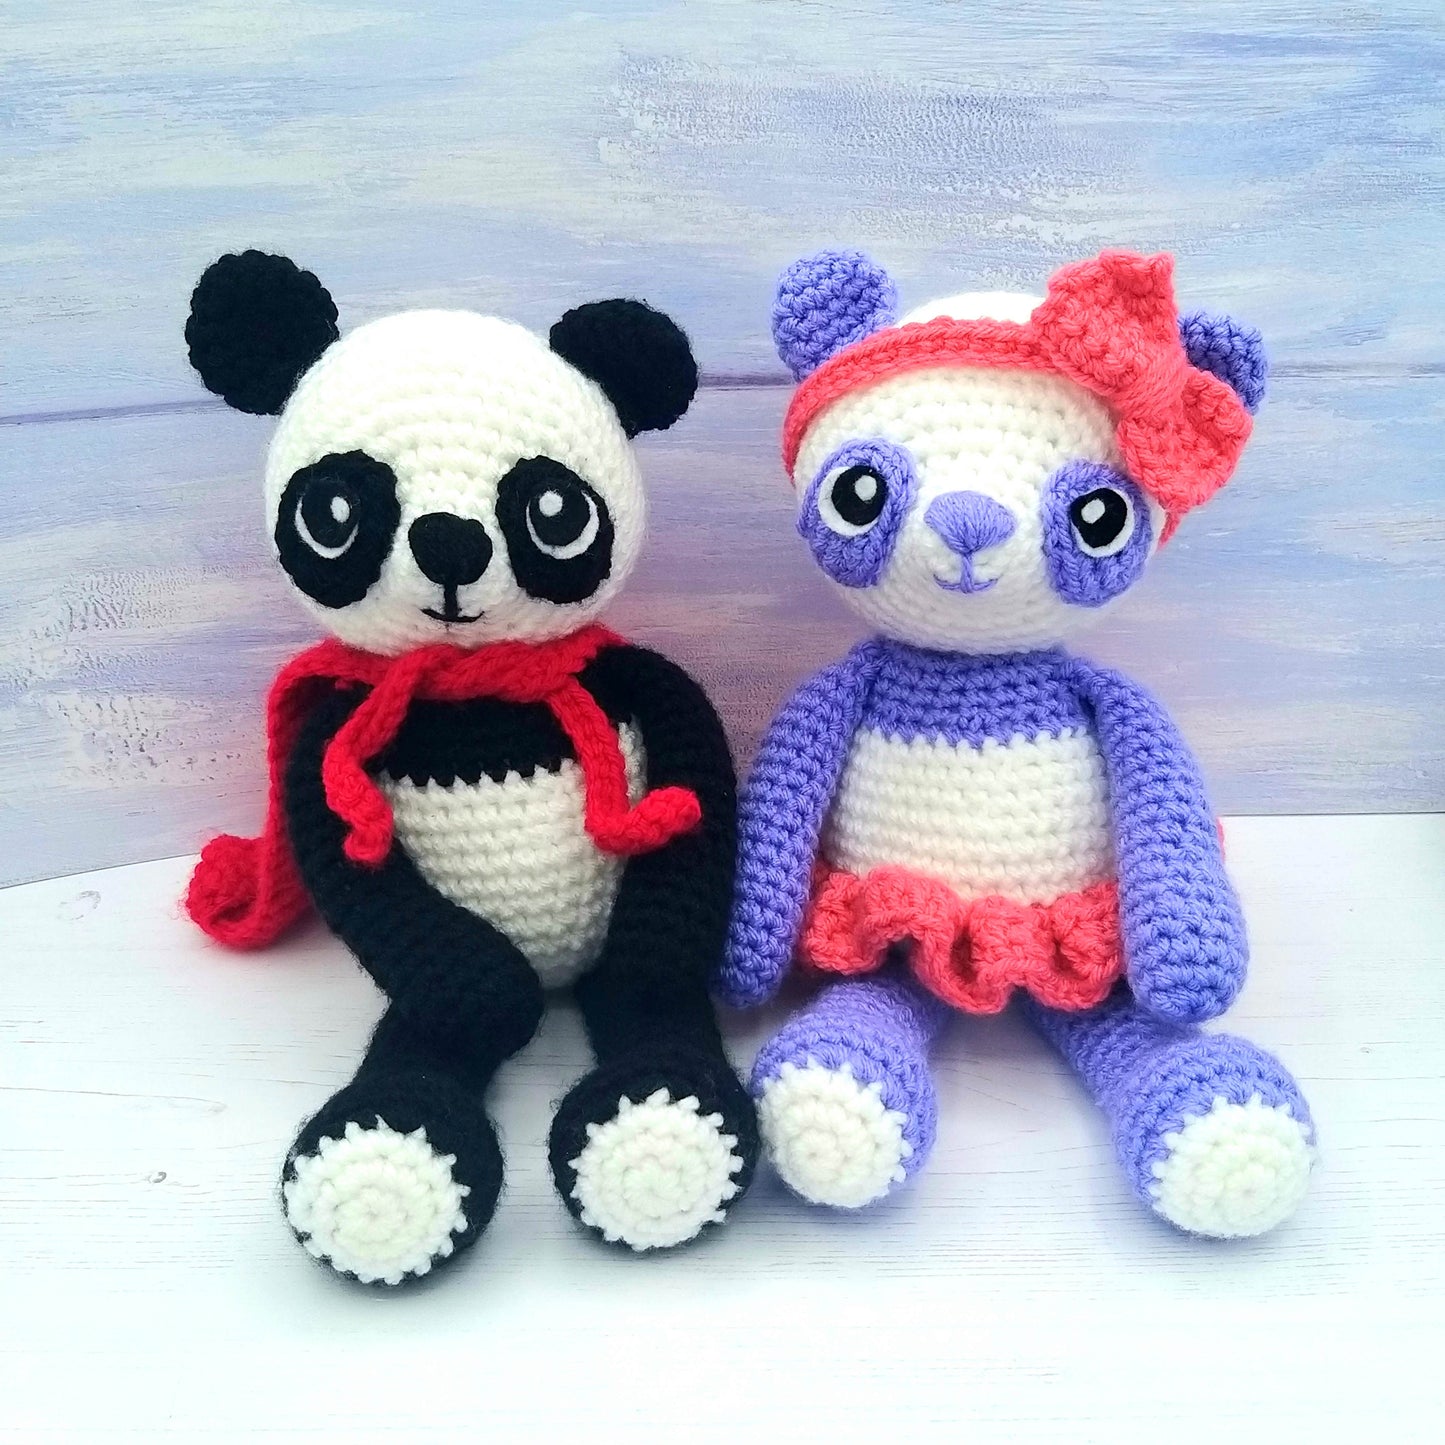 Peter the Panda and Melinda the Panda Luxury Crochet Kit!